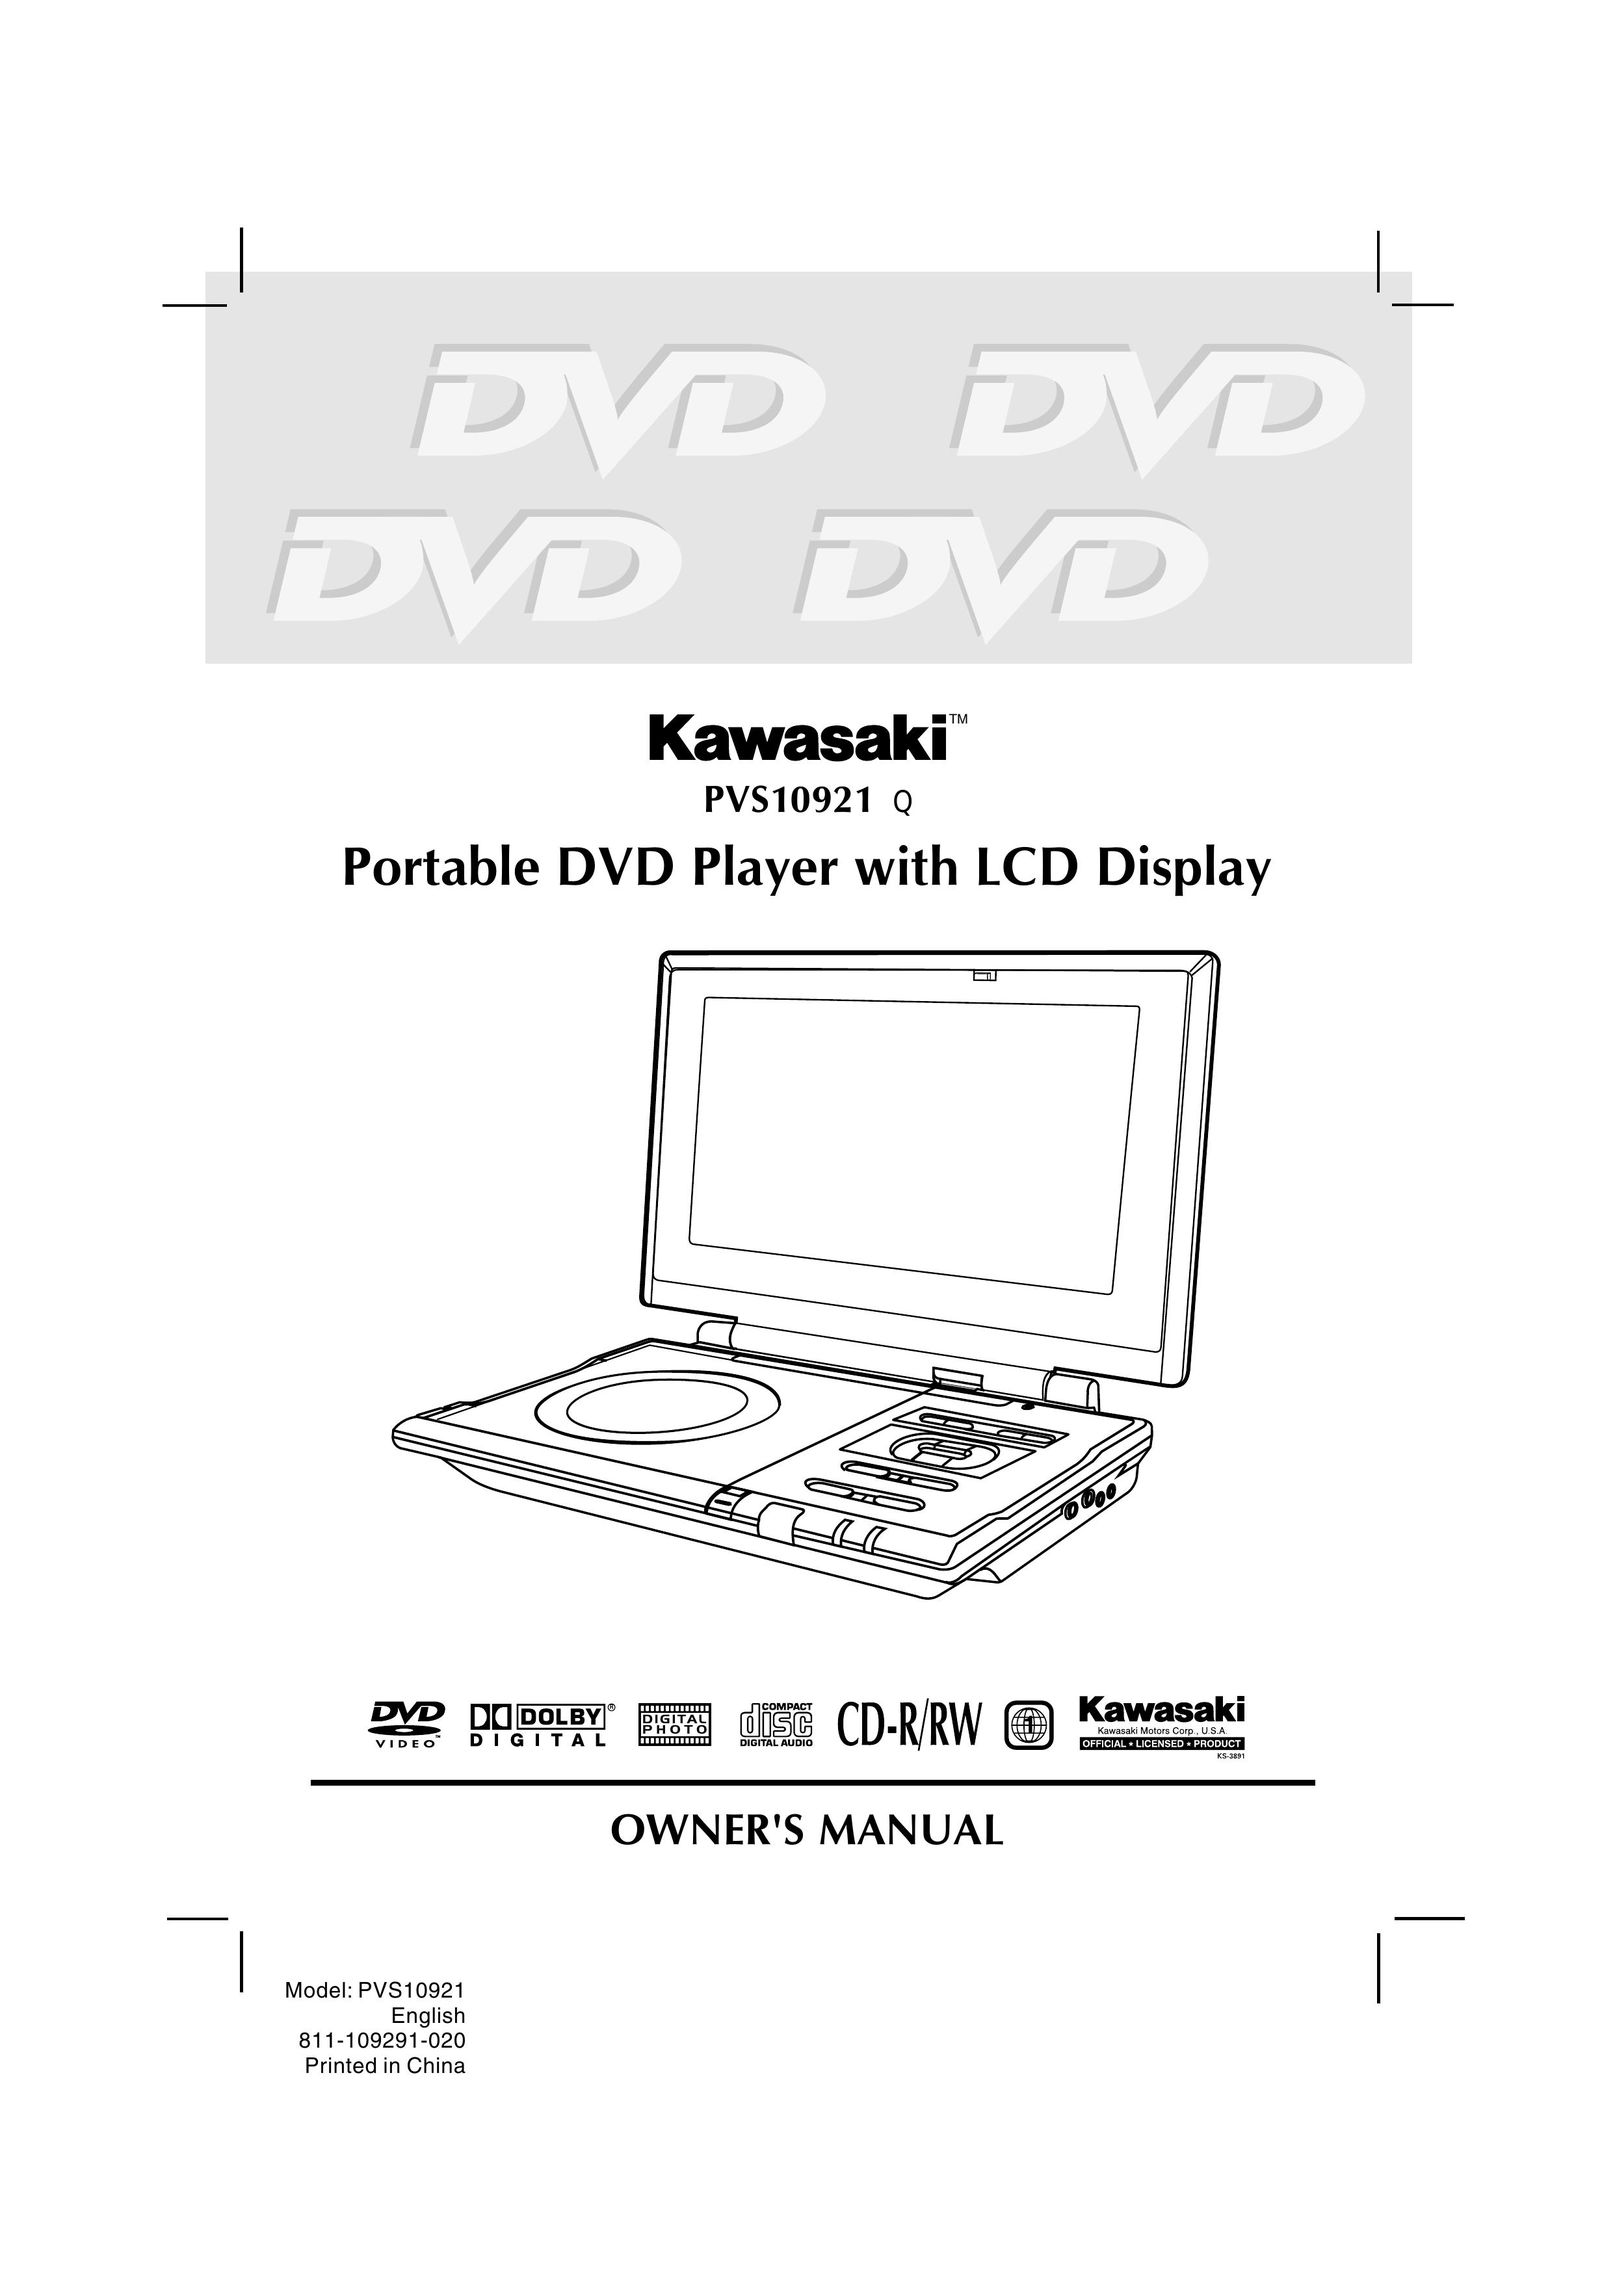 Kawasaki PVS10921 Q Portable DVD Player User Manual